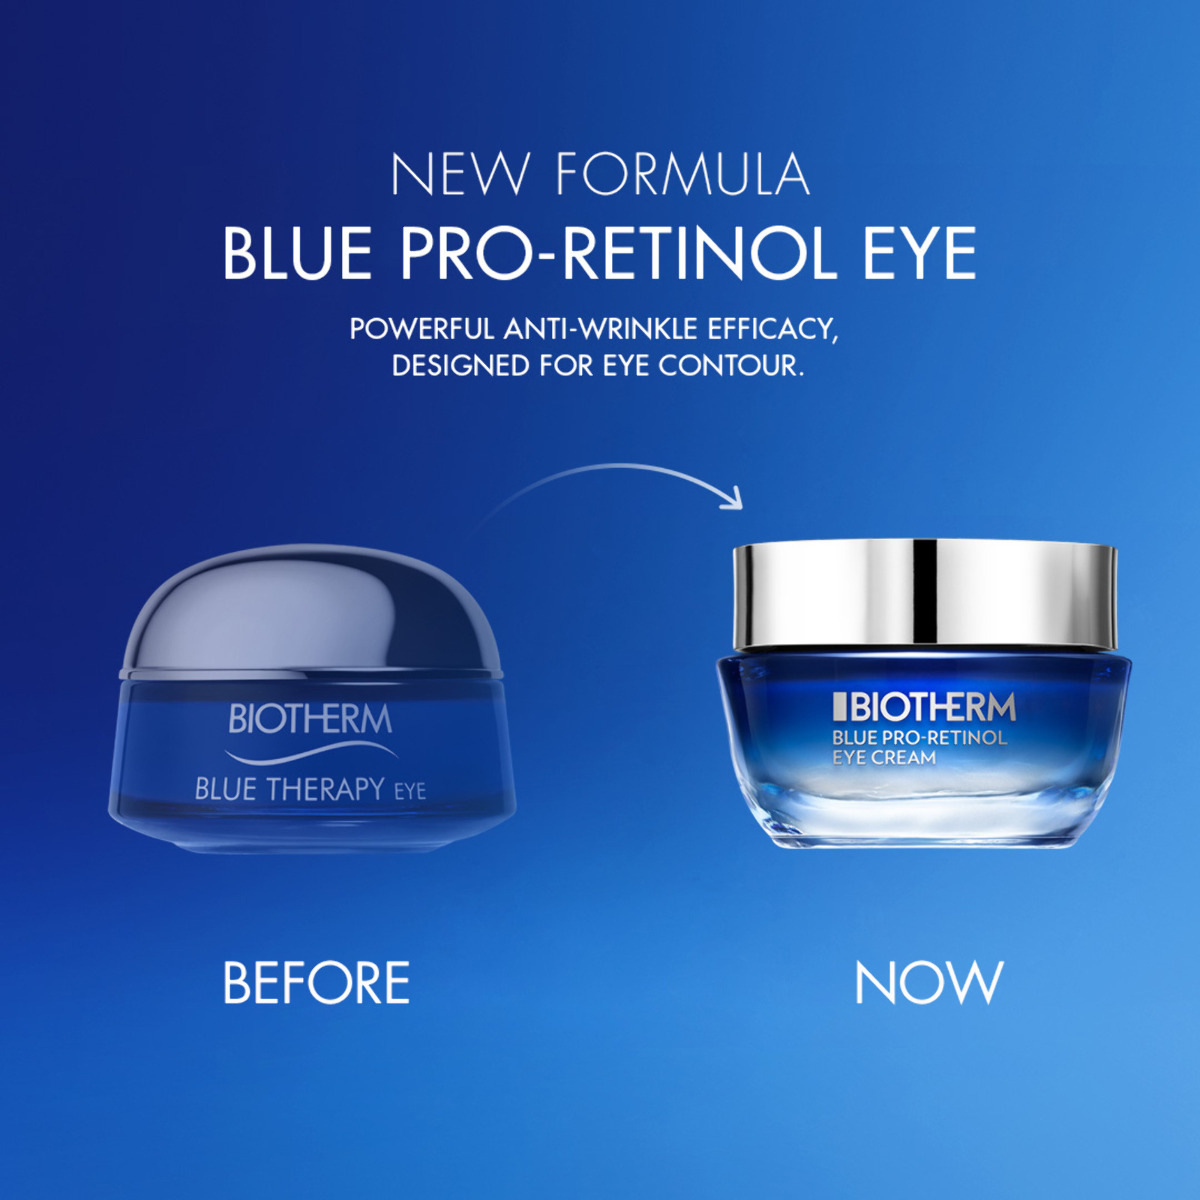 Blue Pro-Retinol Eye Cream